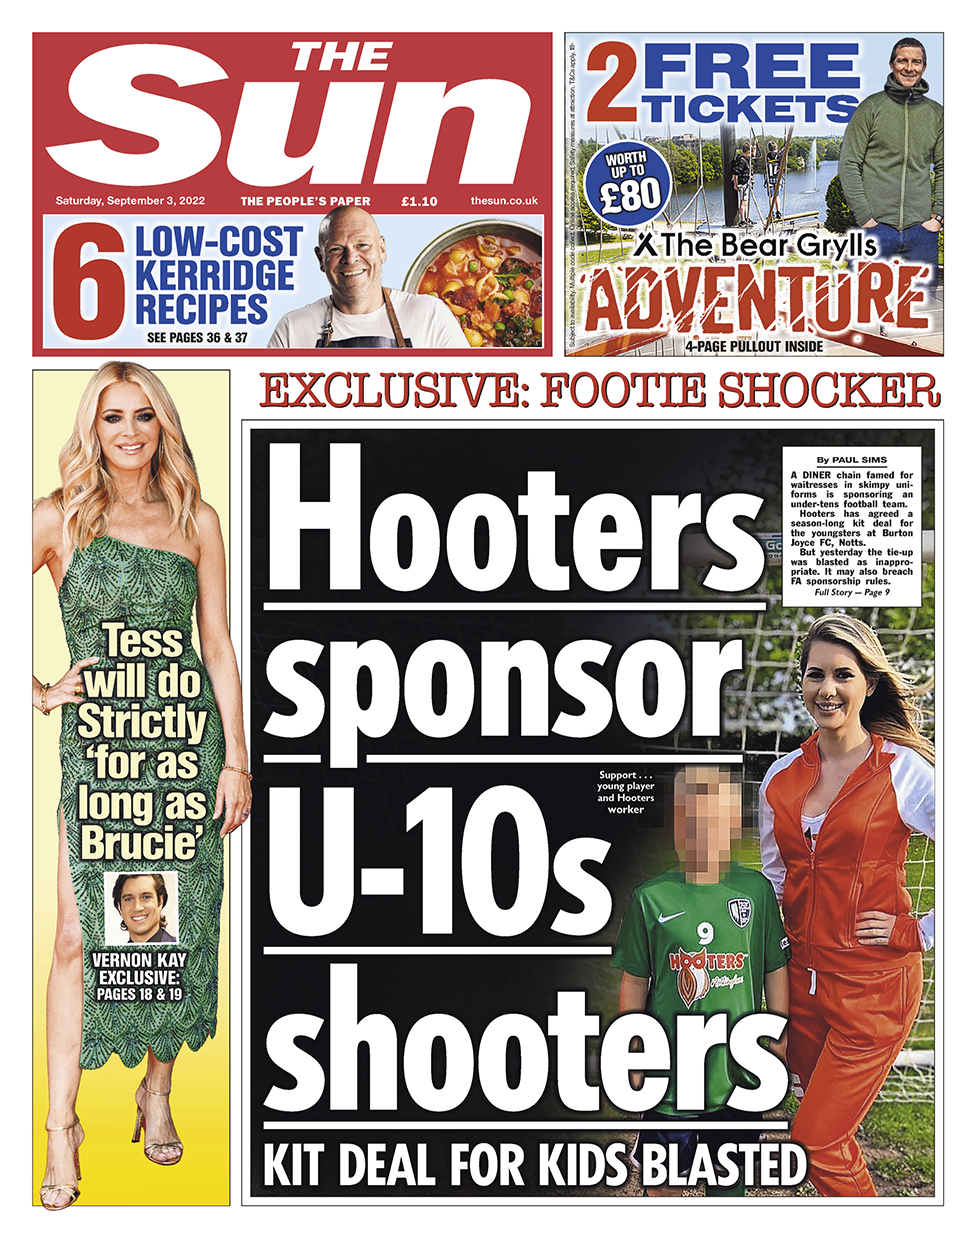 The headline in The Sun reads 'Hooters sponsor U-10s shooters'